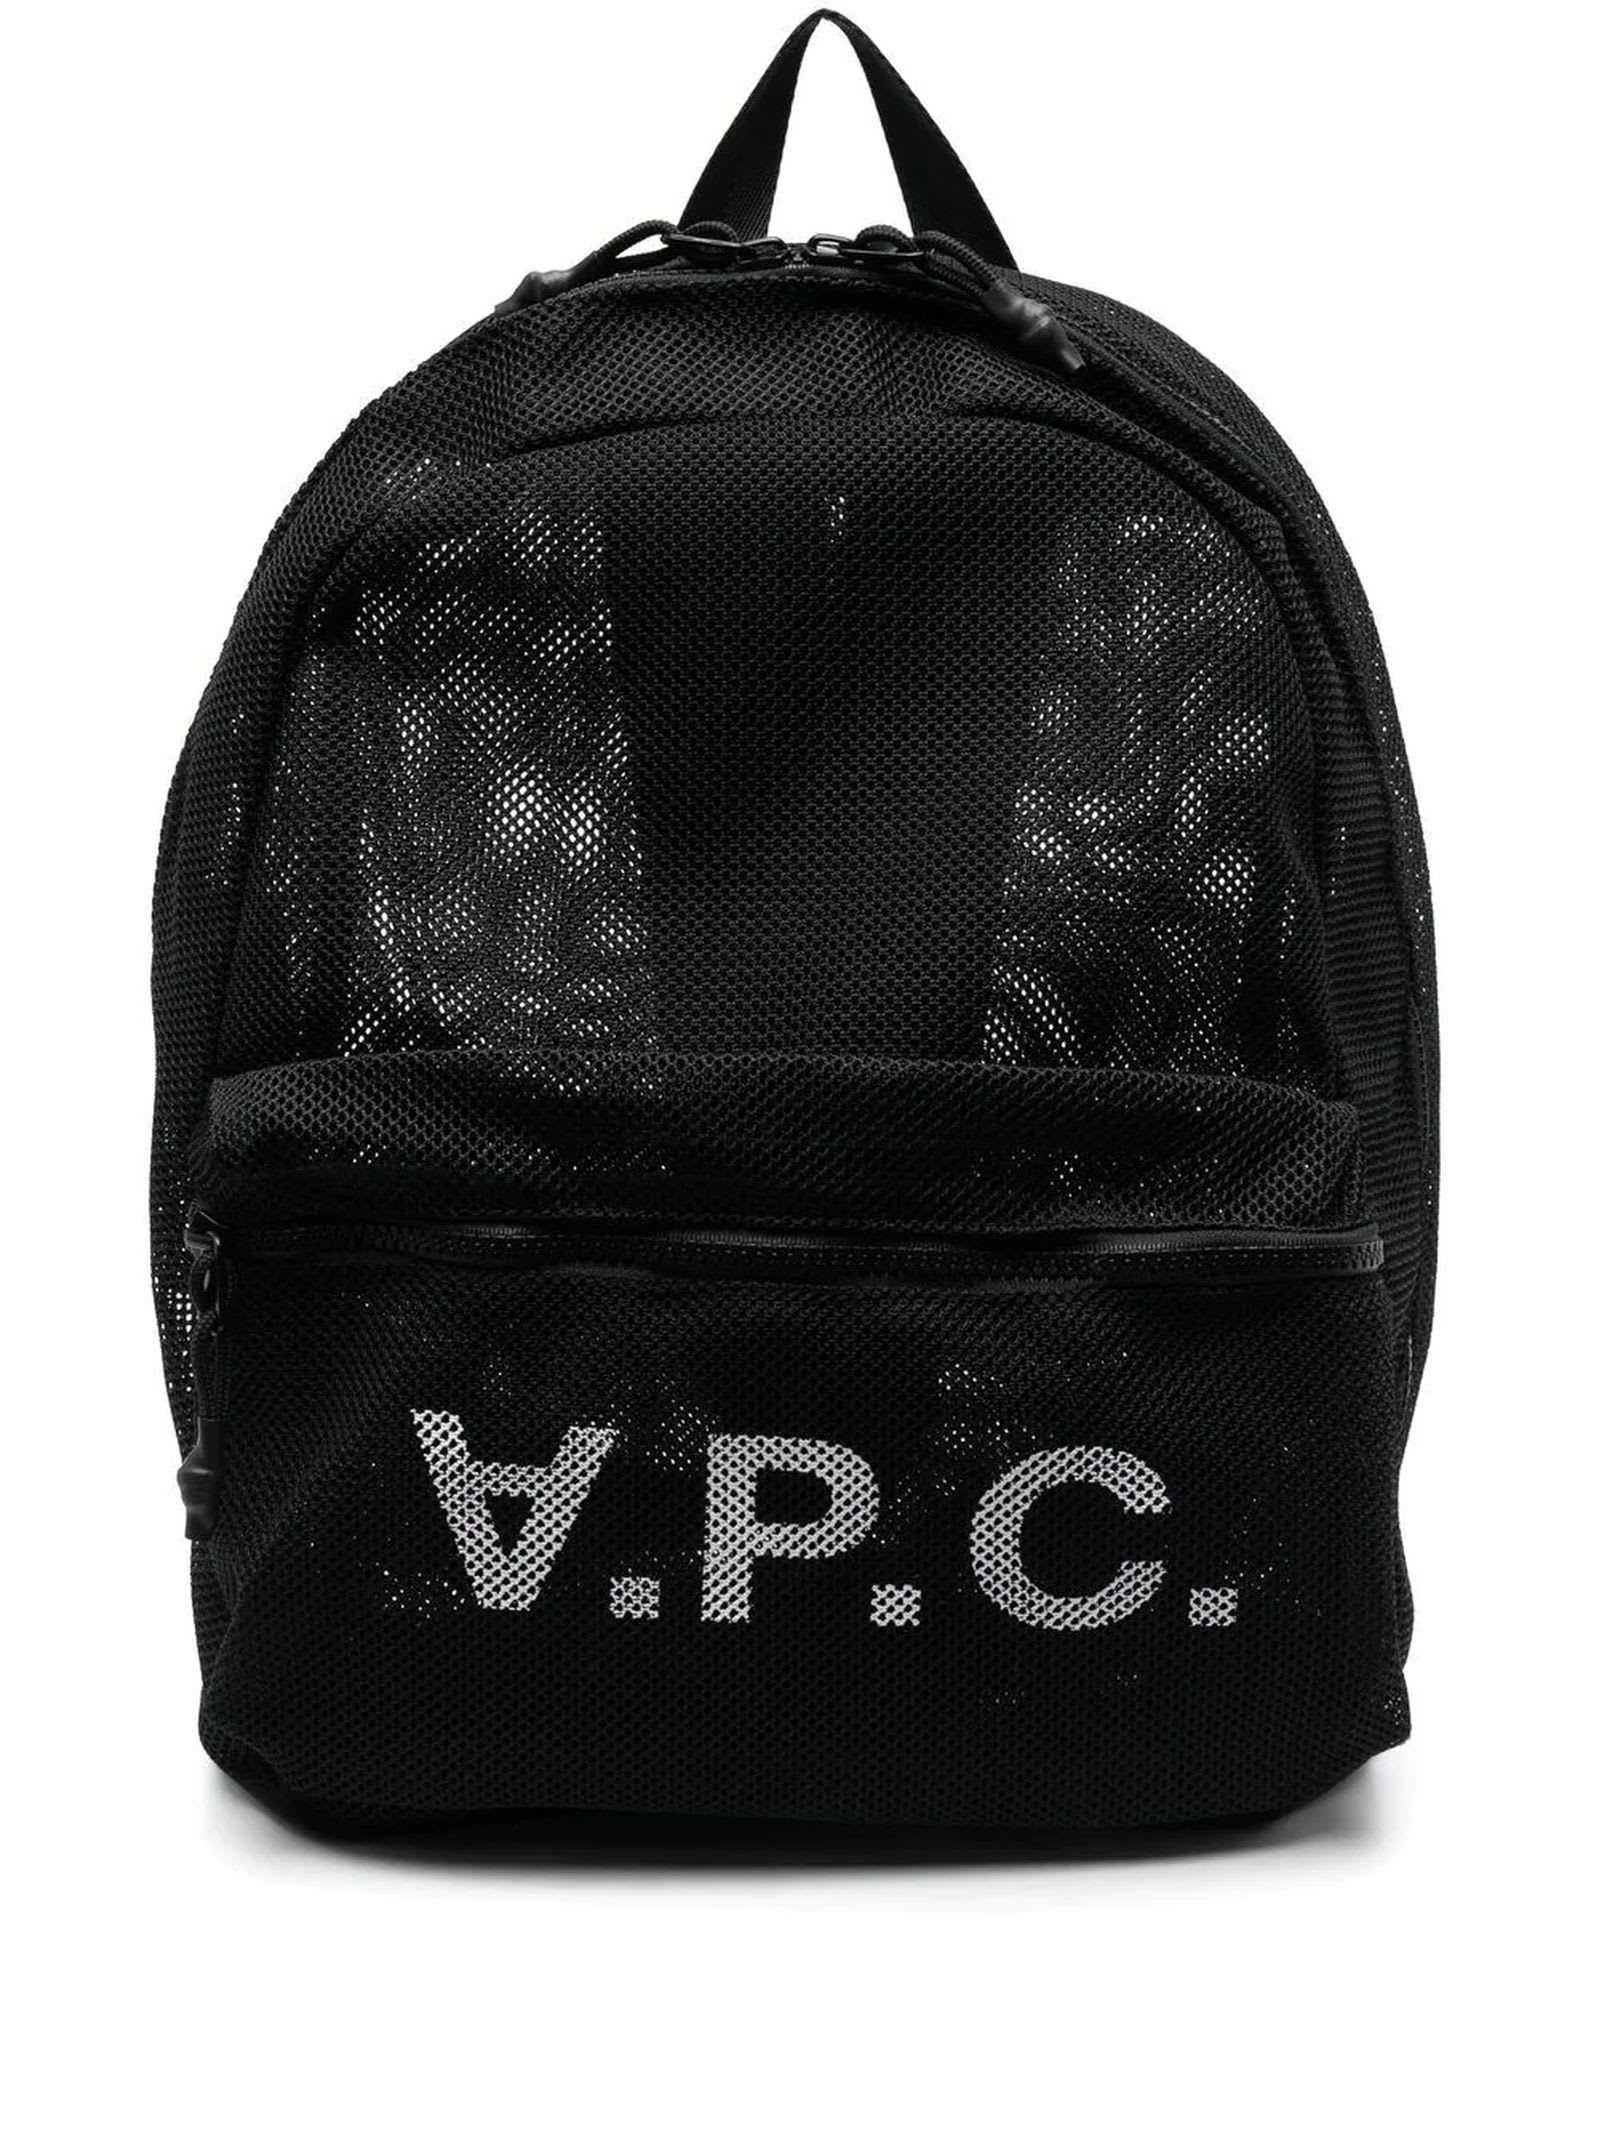 A.P.C. Black Mesh Backpack